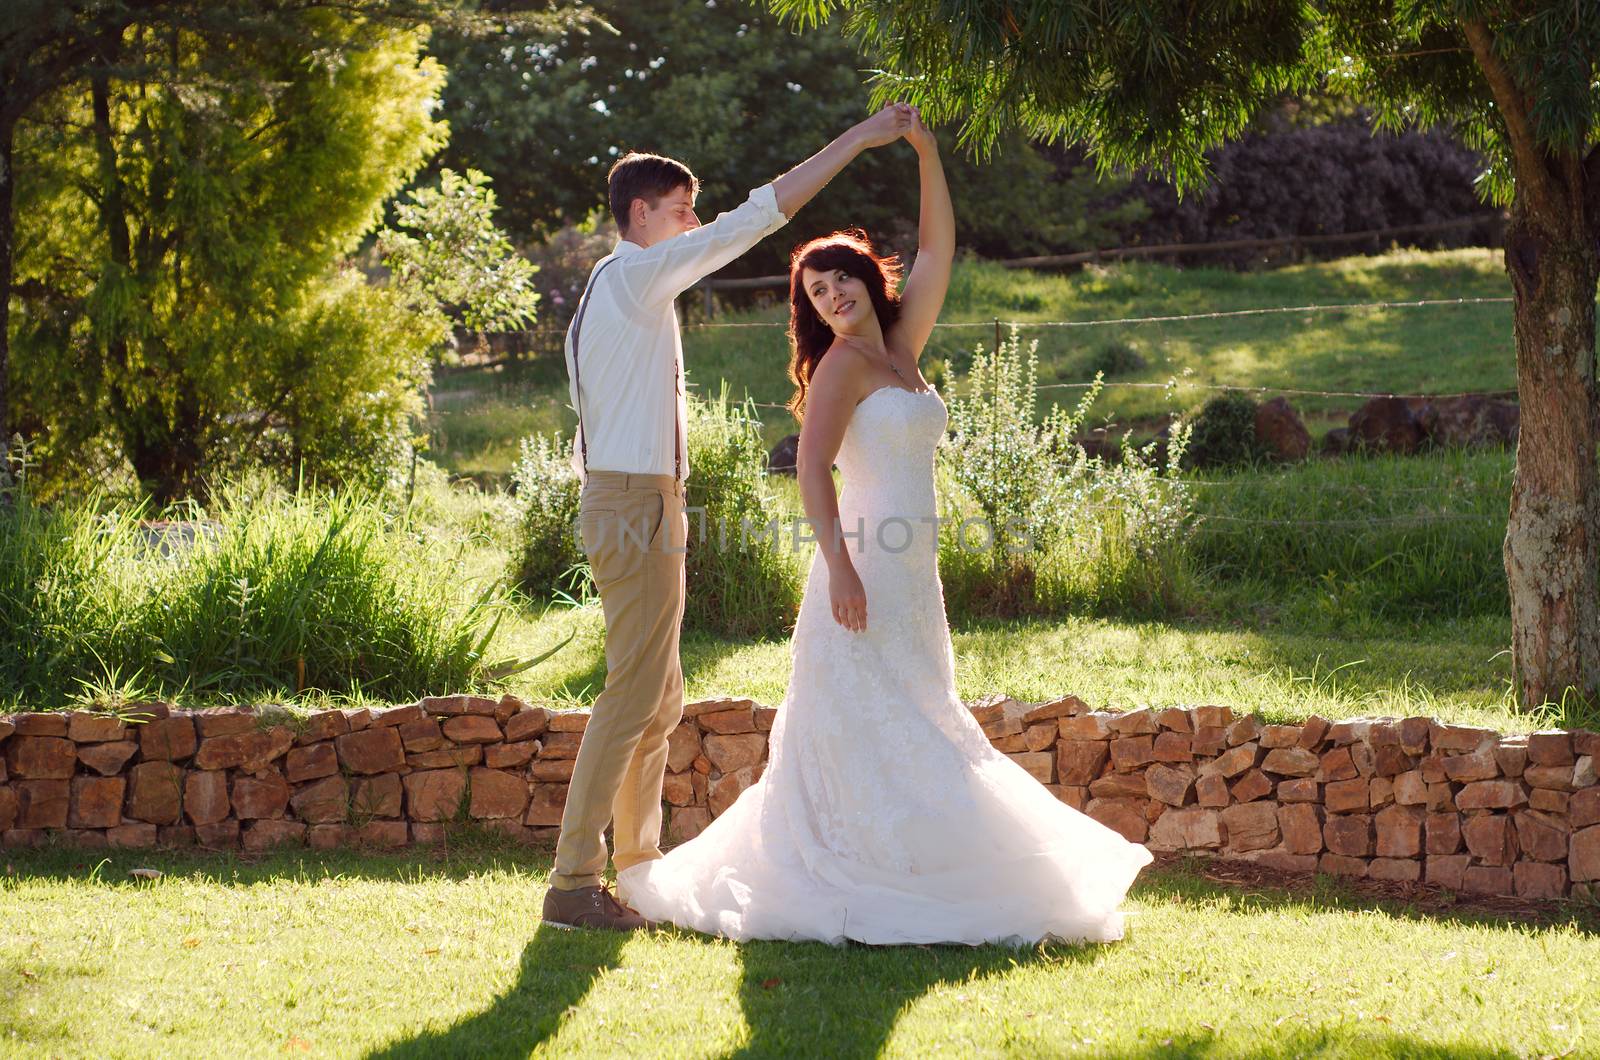 Bride and groom dancing outside garden wedding ceremony